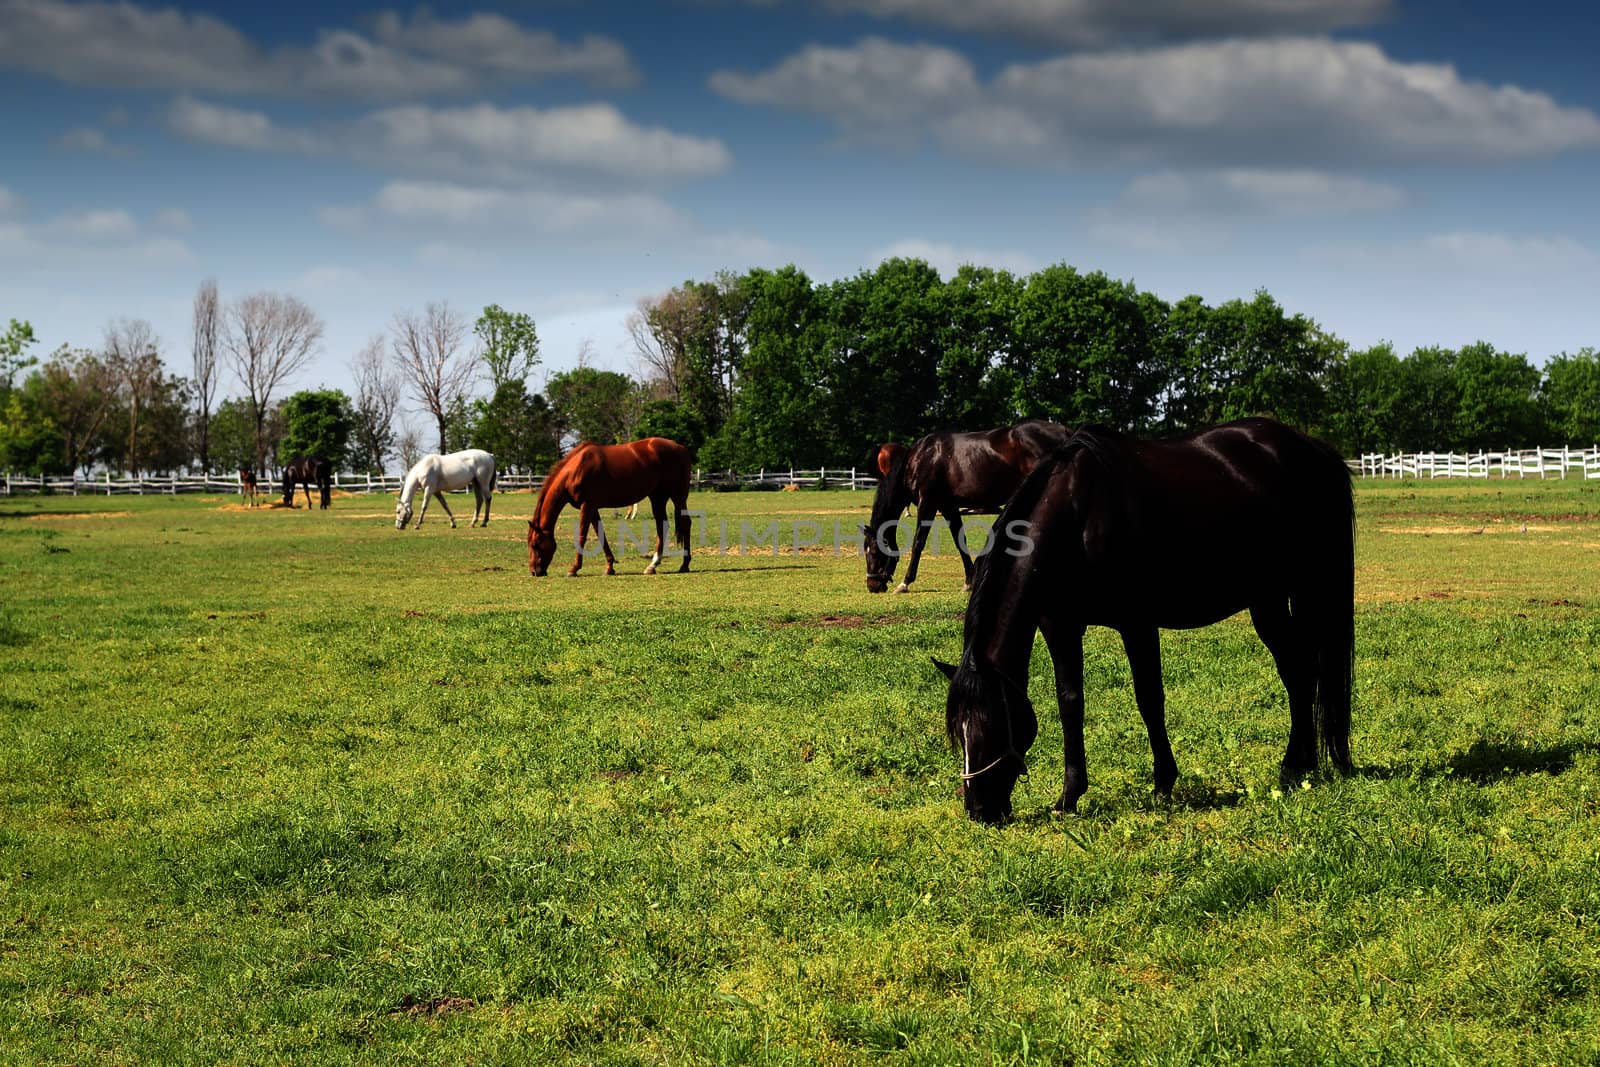 herd of horses grazing ranch scene by goce